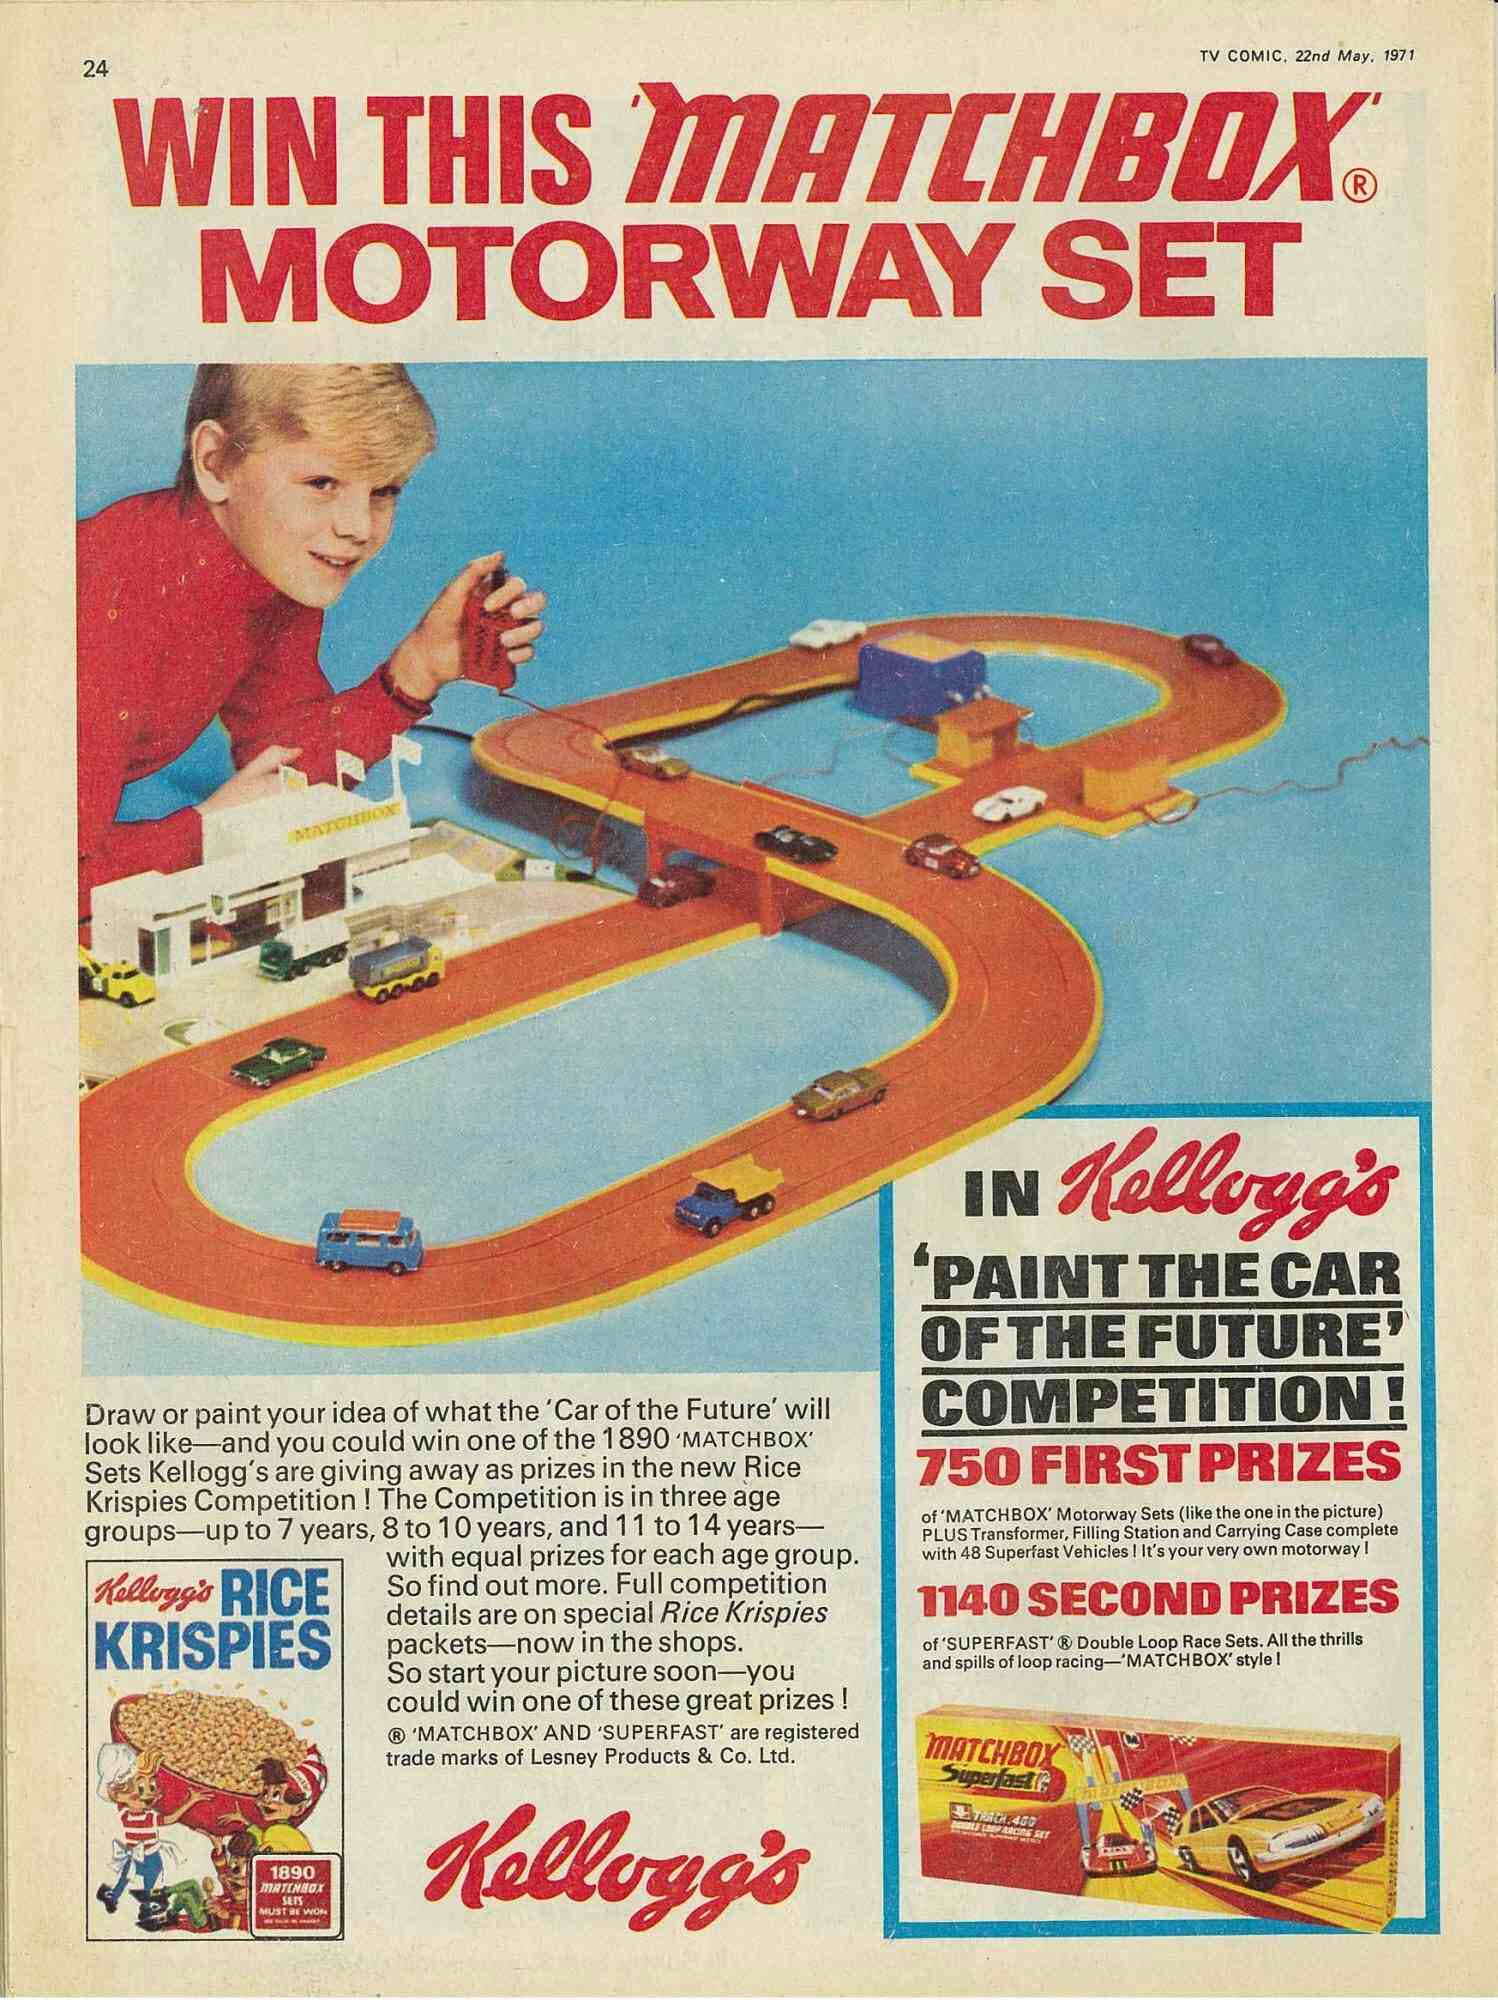 1971 Rice Krispies Matchbox Motorway Set competition